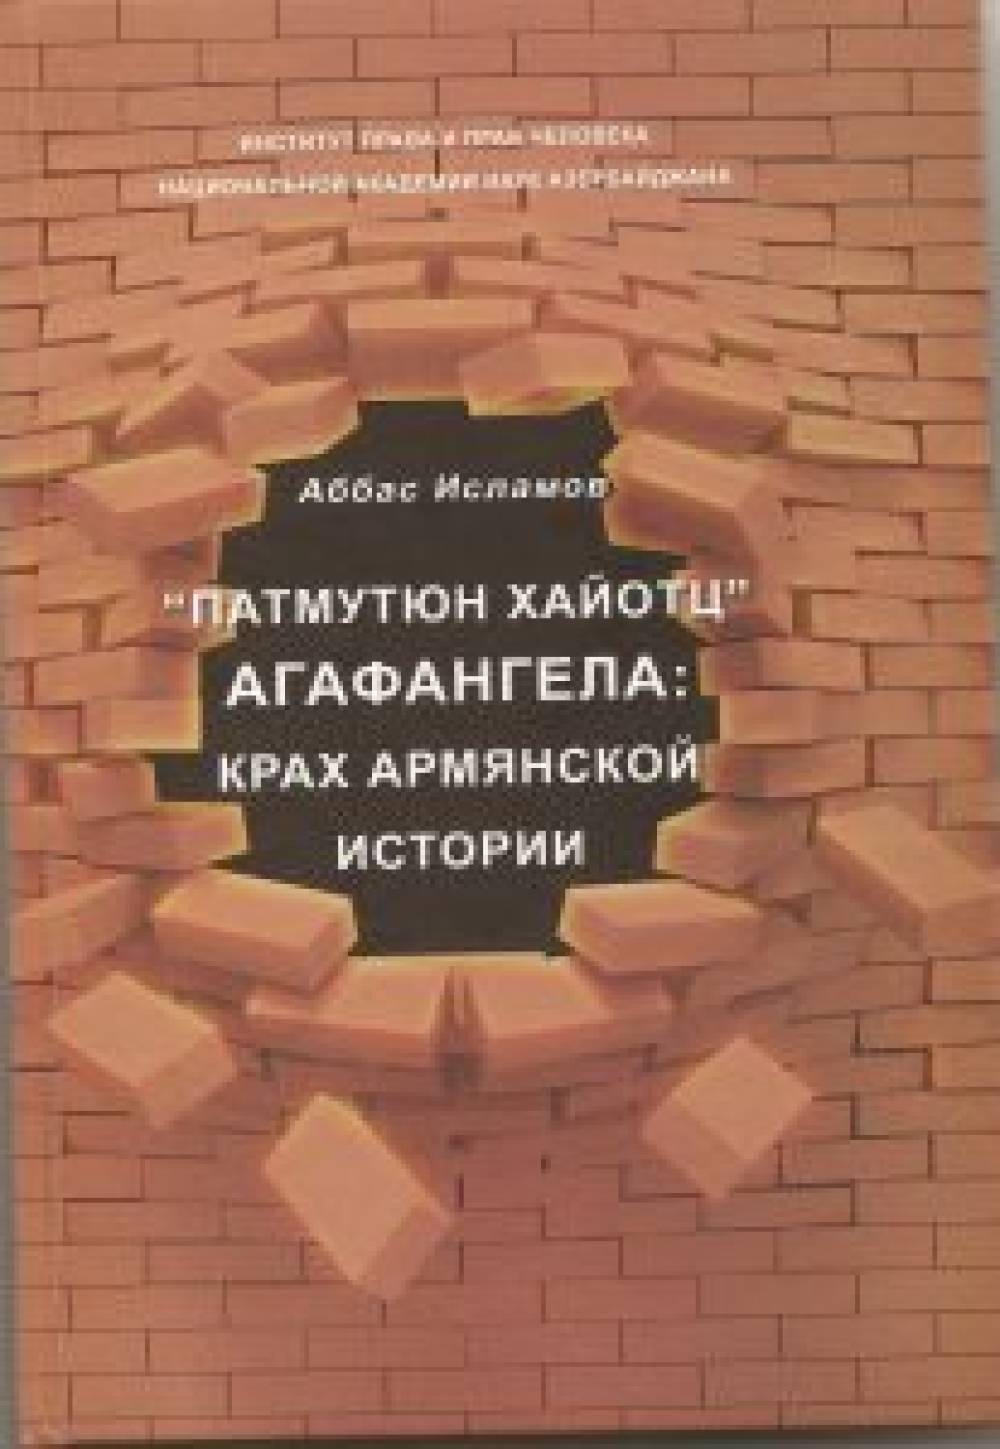 Abbas Islamov: “Patmutiun hiotz” Agafangel: the collapse of Armenian history